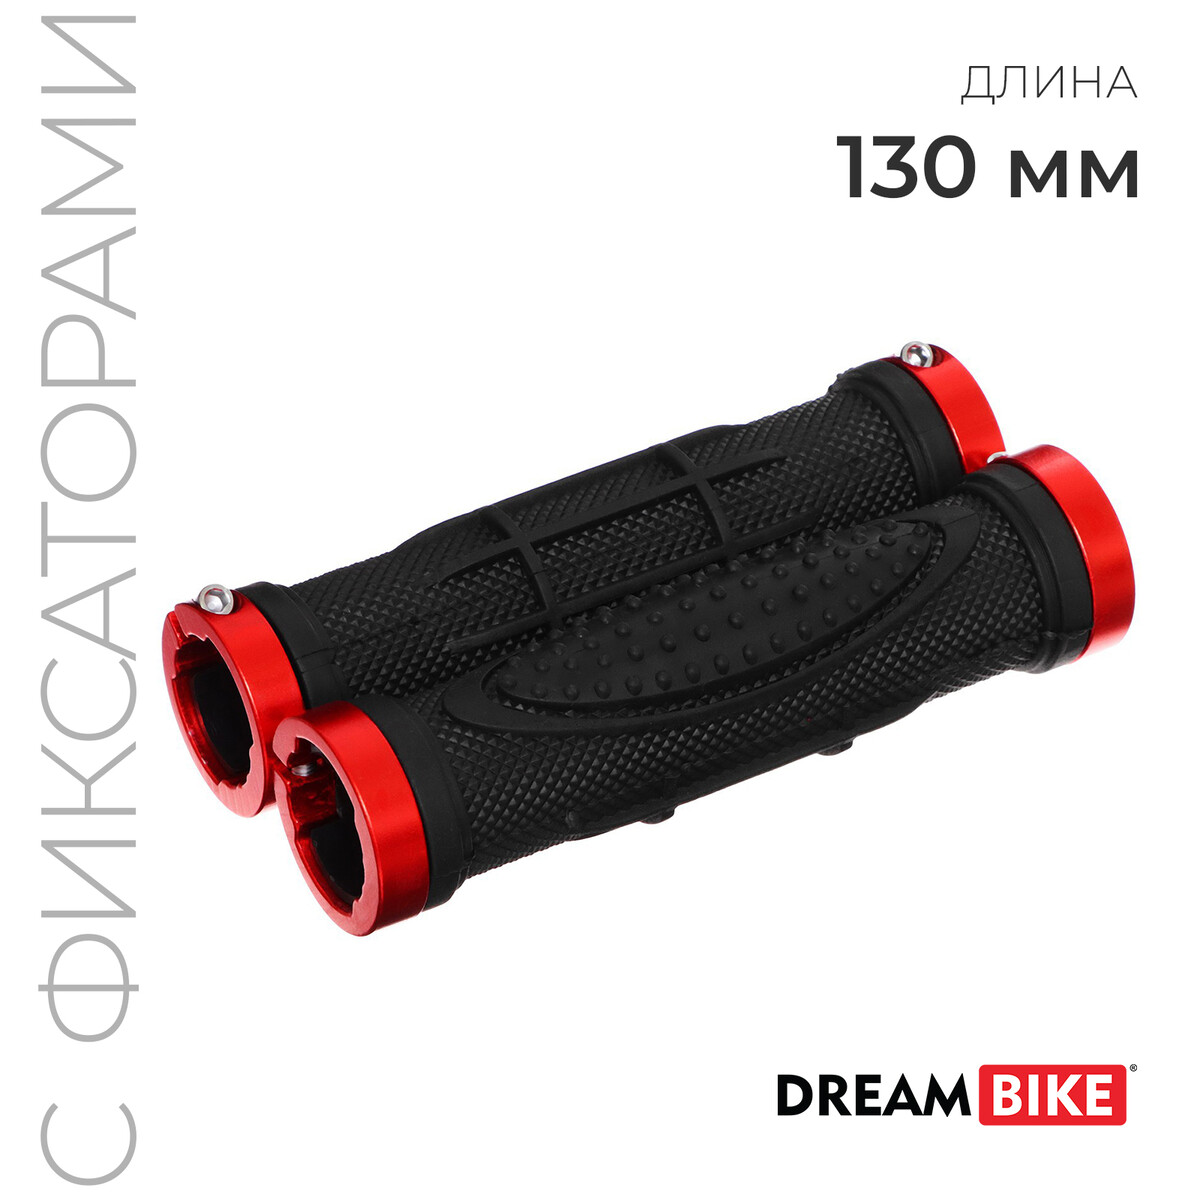 Грипсы 130 мм, lock on, цвет черный/красный грипсы dream bike 130 мм lock on красный